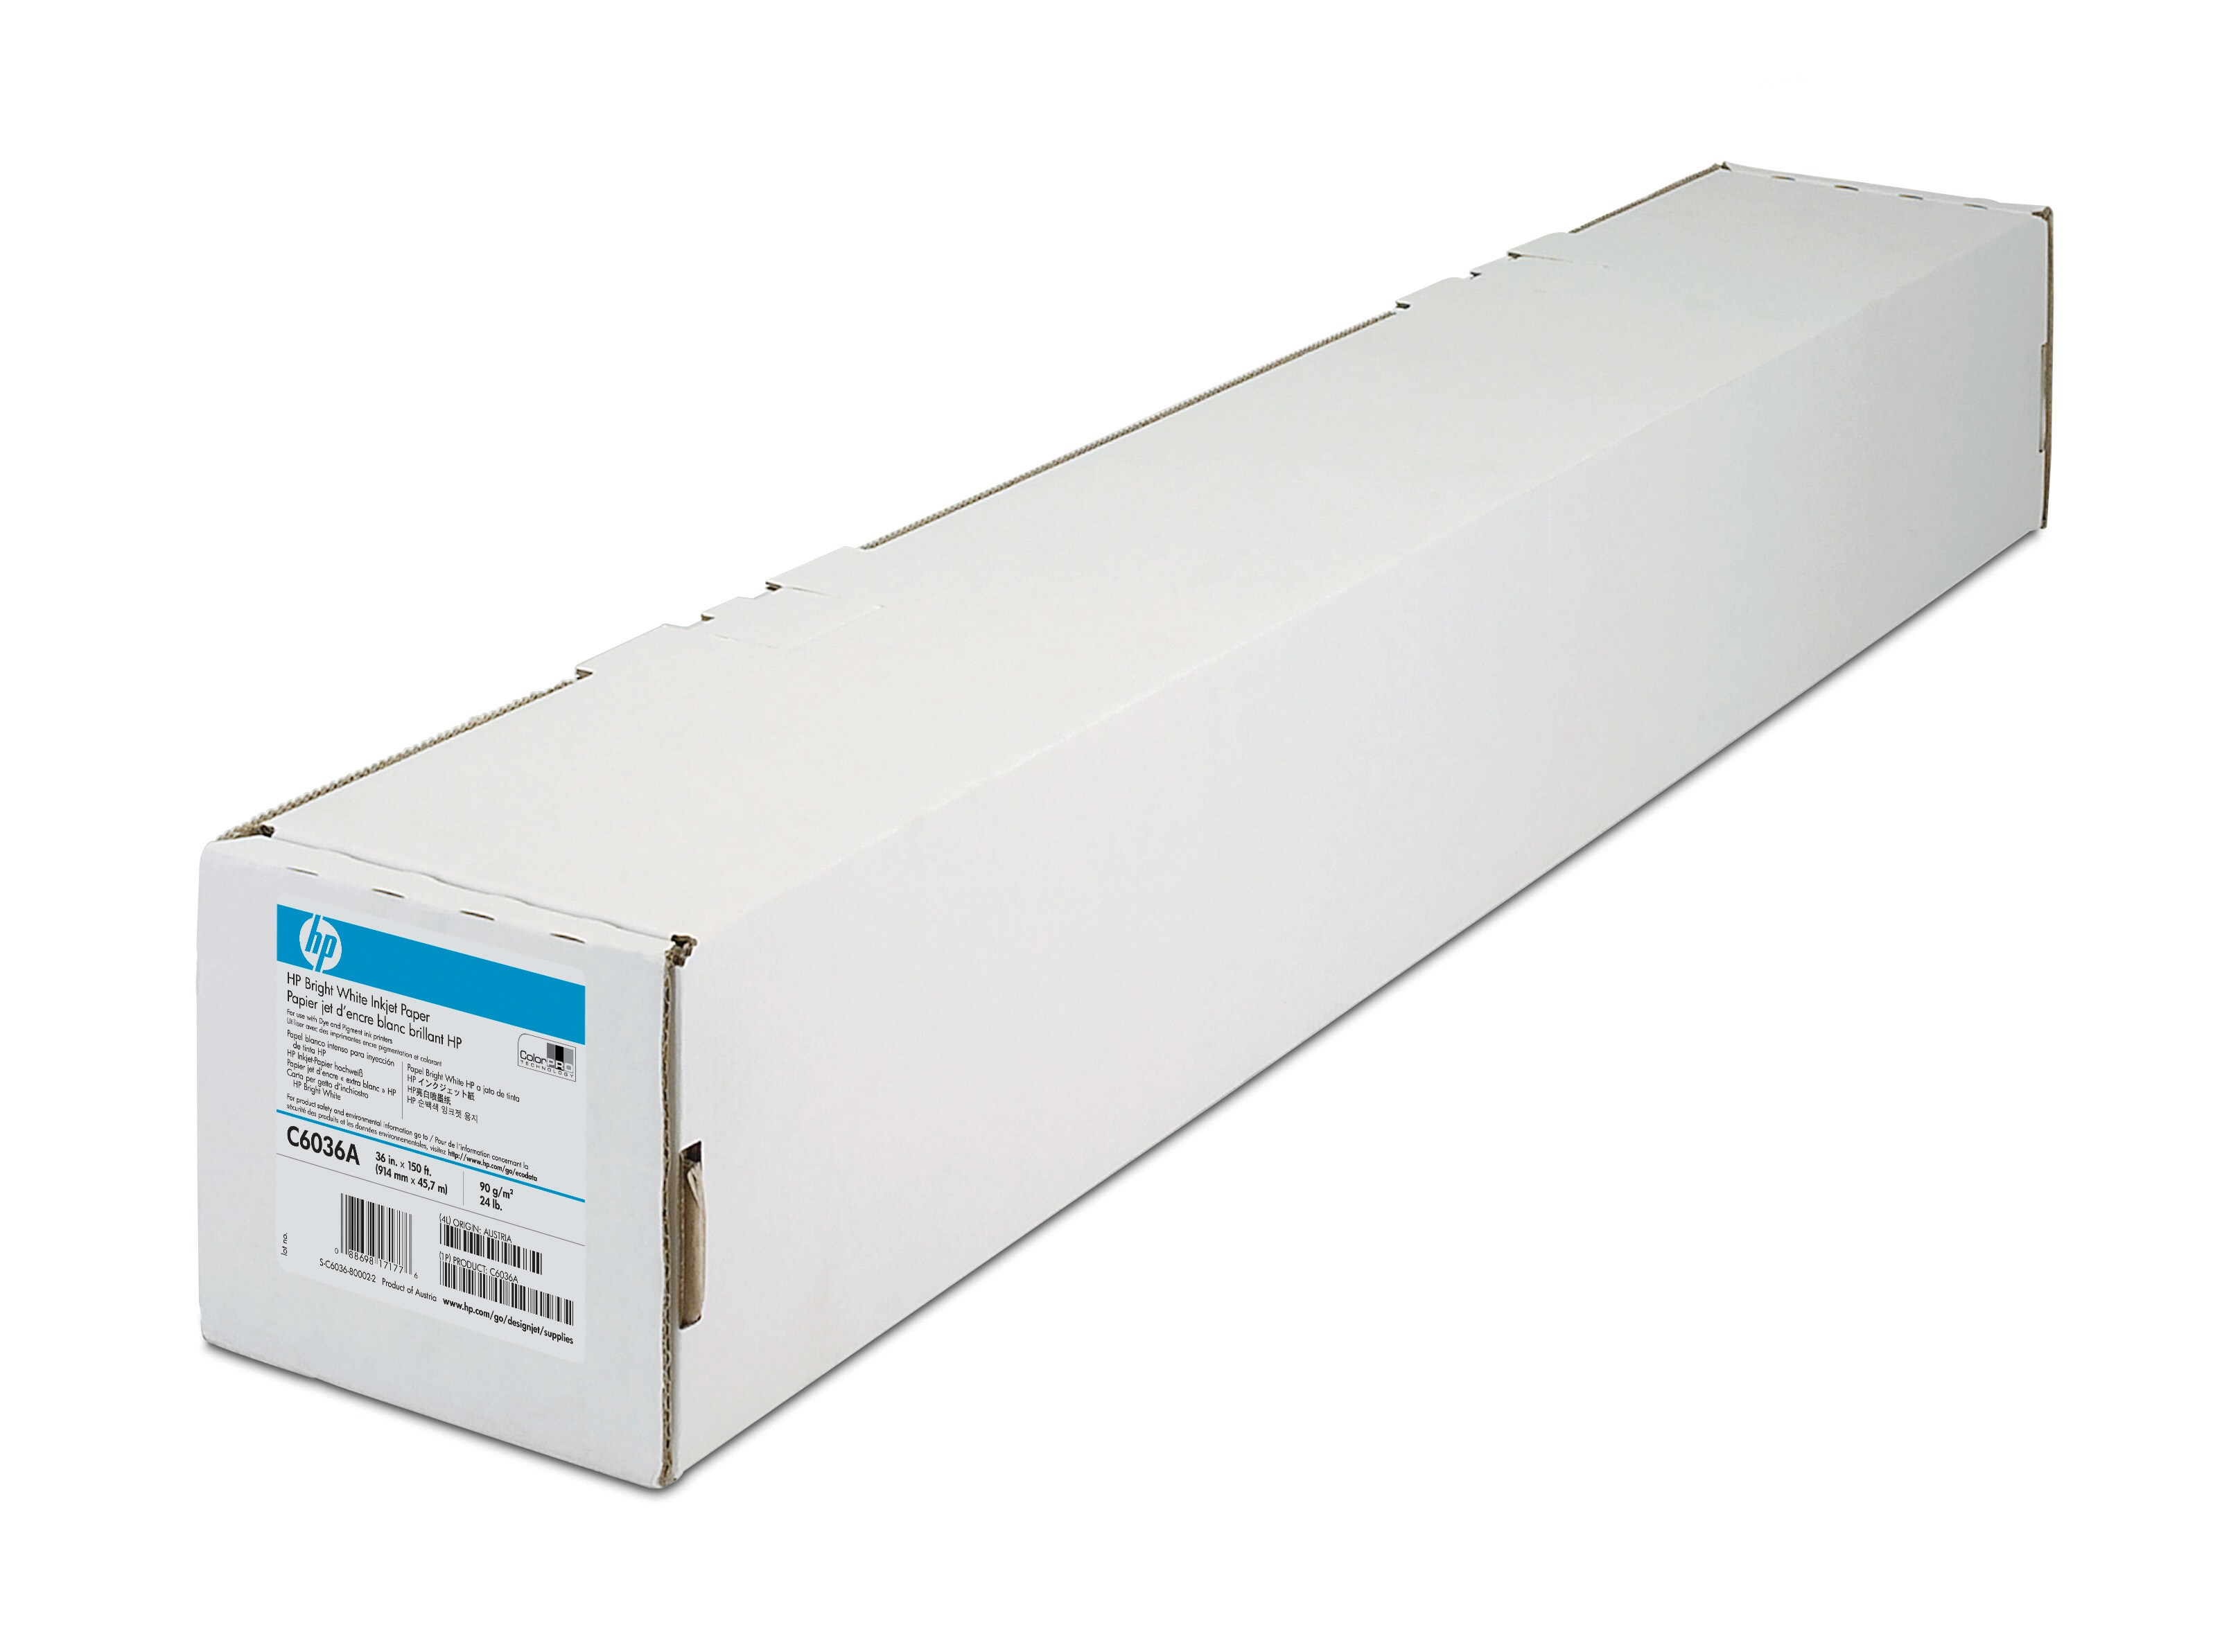  C6036A Papier helder wit inktjet 90g/m2 914mm x 45.7m 1 rol 1-pack